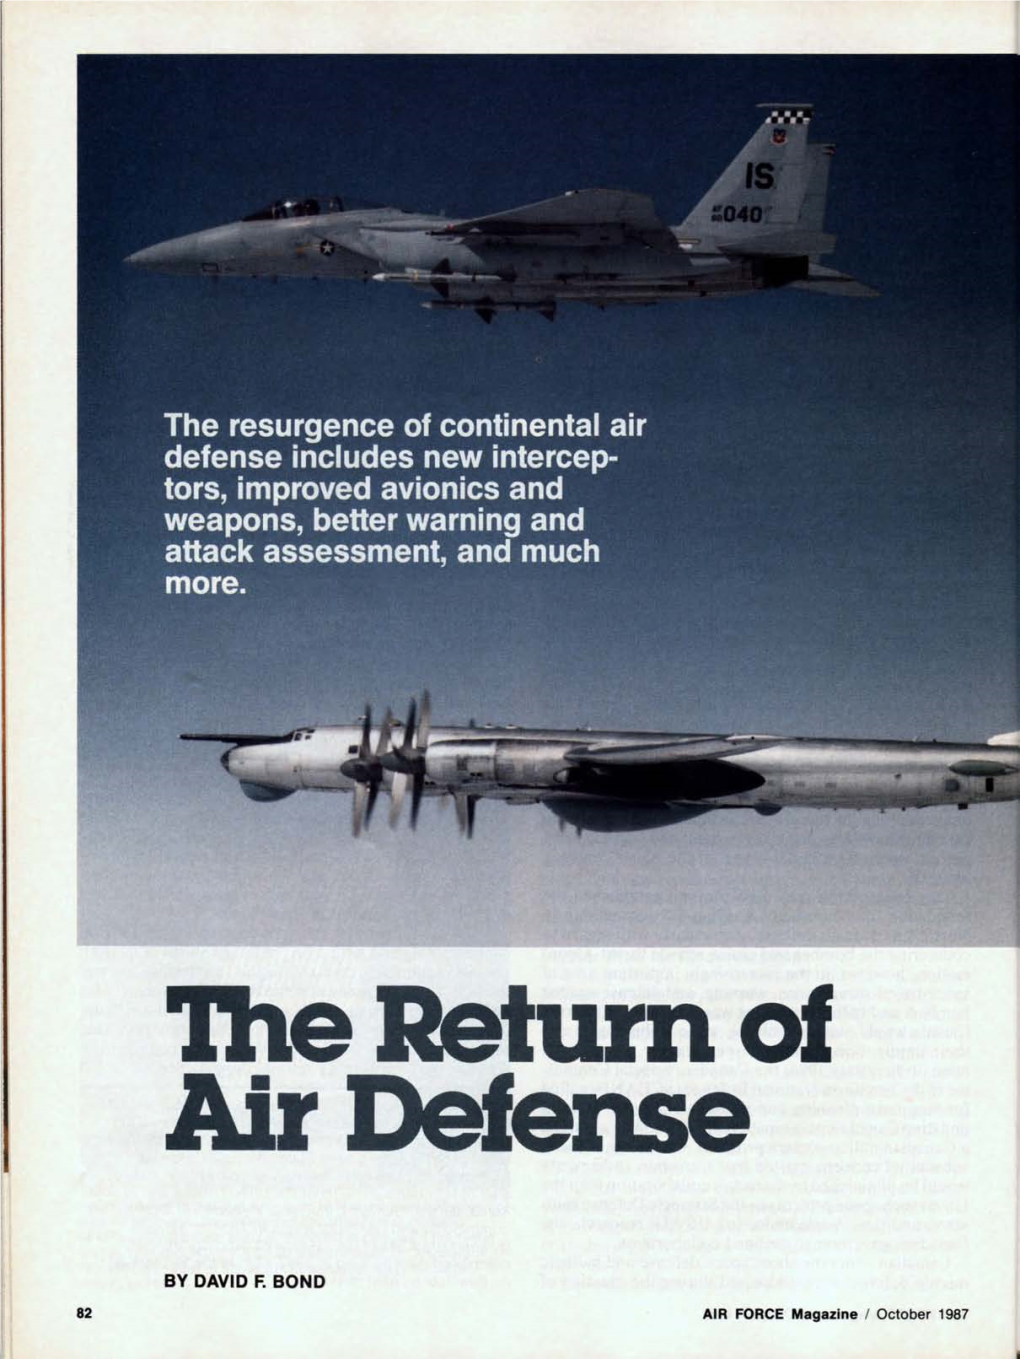 The Return of Air Defense